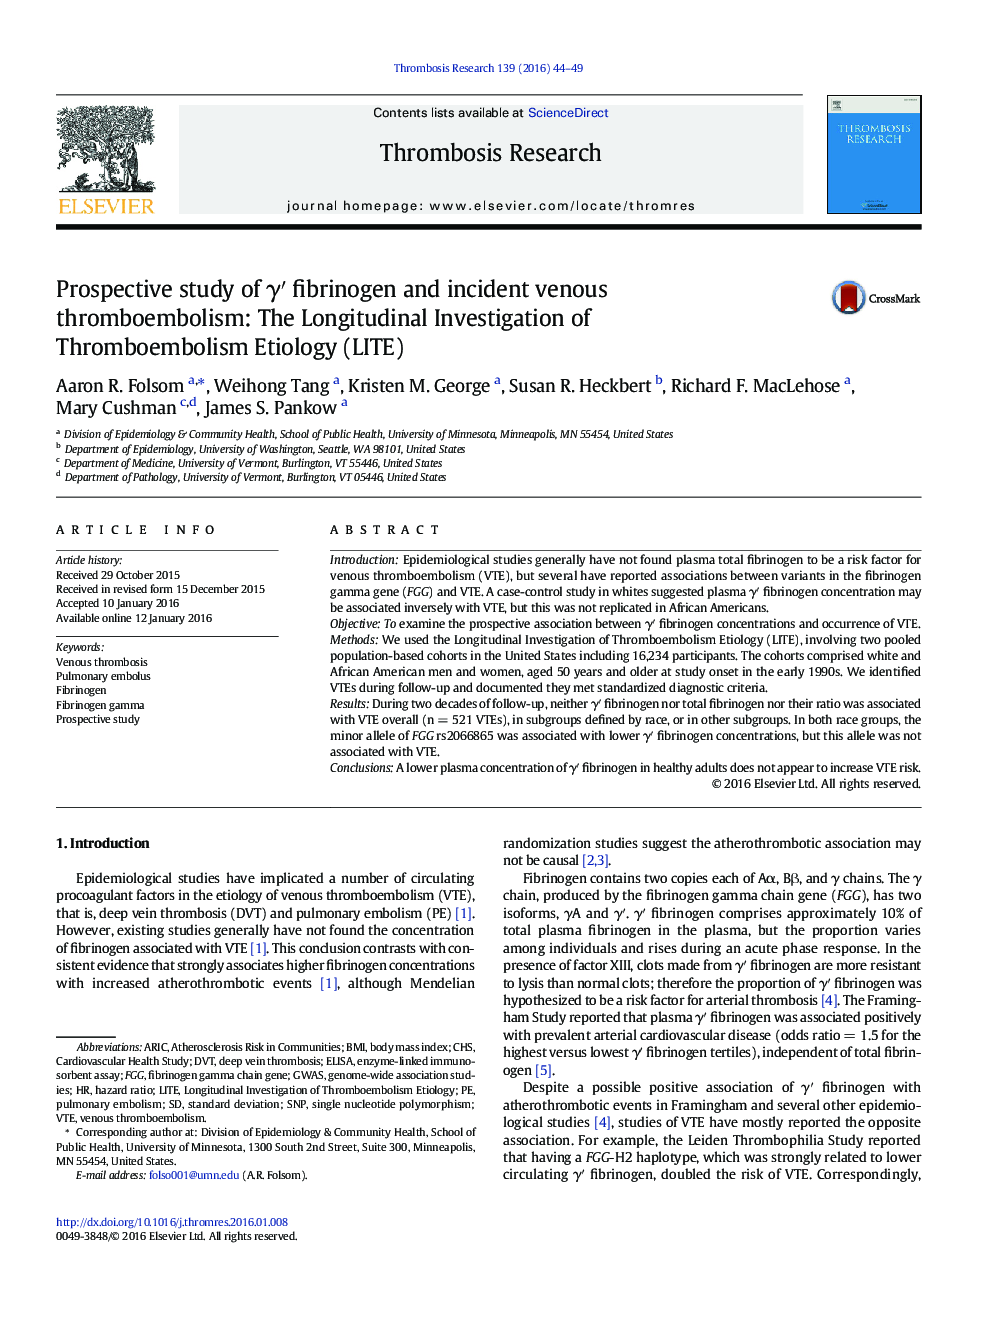 Prospective study of γ′ fibrinogen and incident venous thromboembolism: The Longitudinal Investigation of Thromboembolism Etiology (LITE)